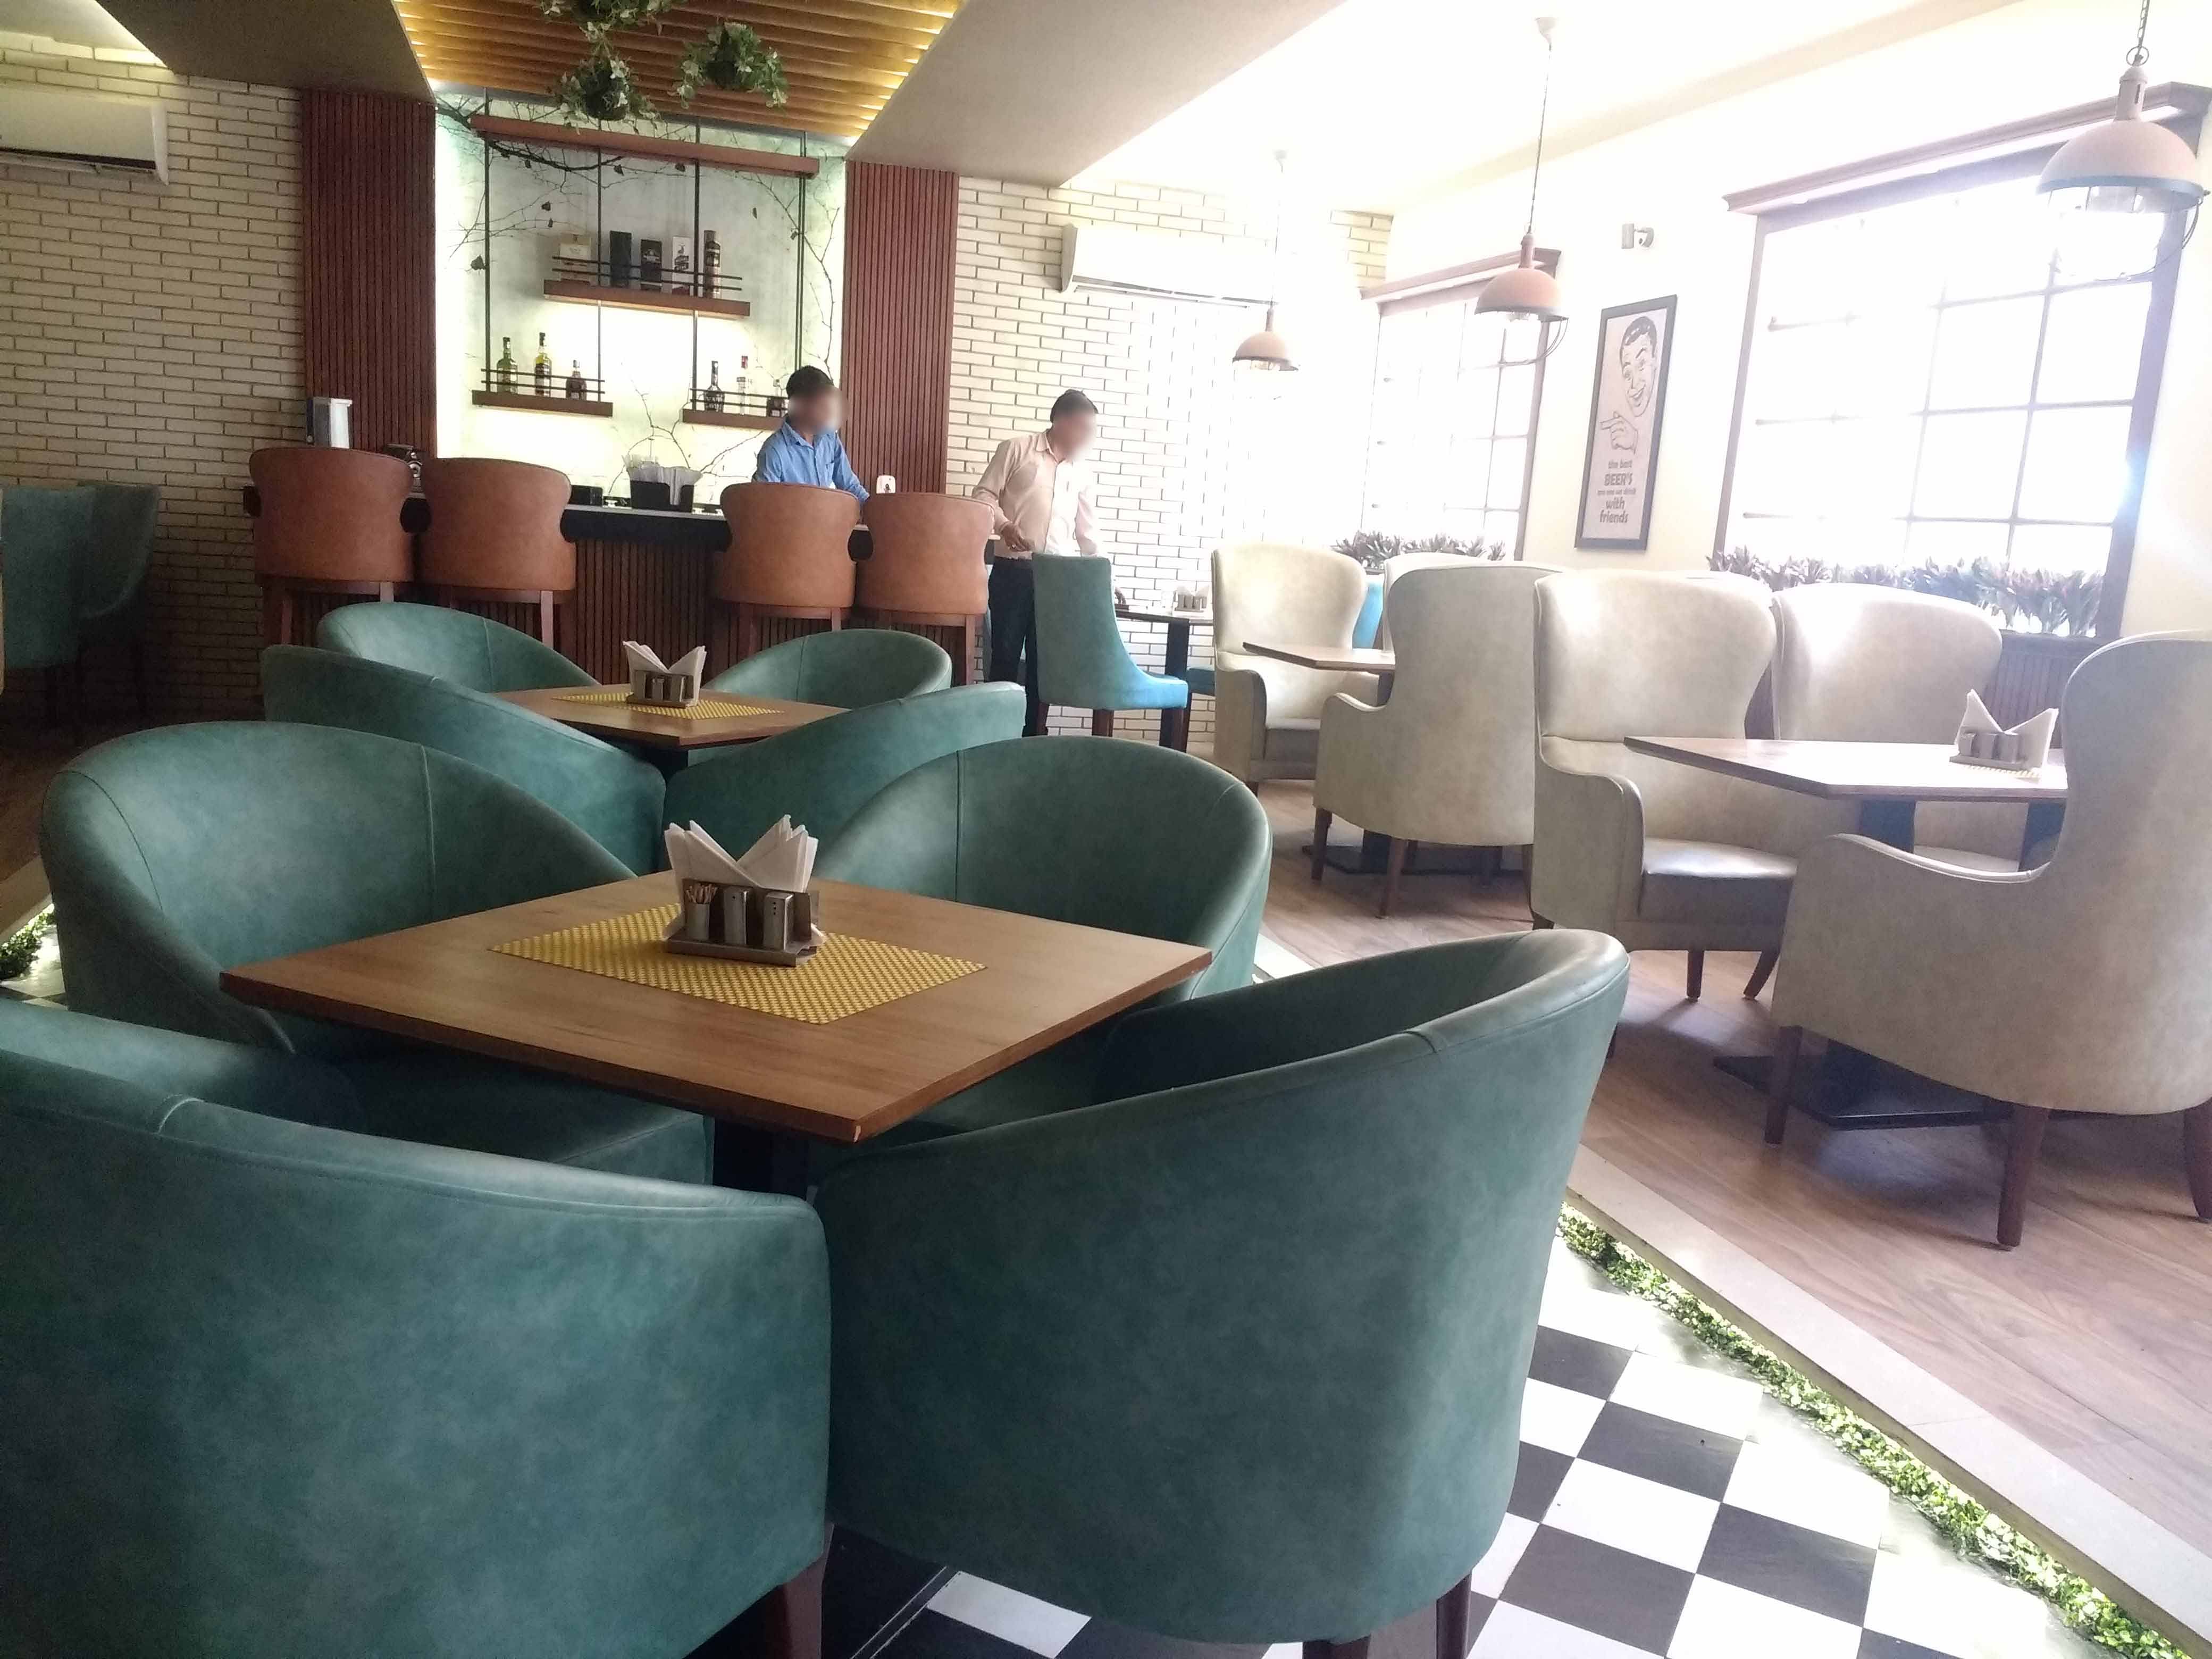 Evergreen Restaurant Bar in Zirakpur, Chandigarh